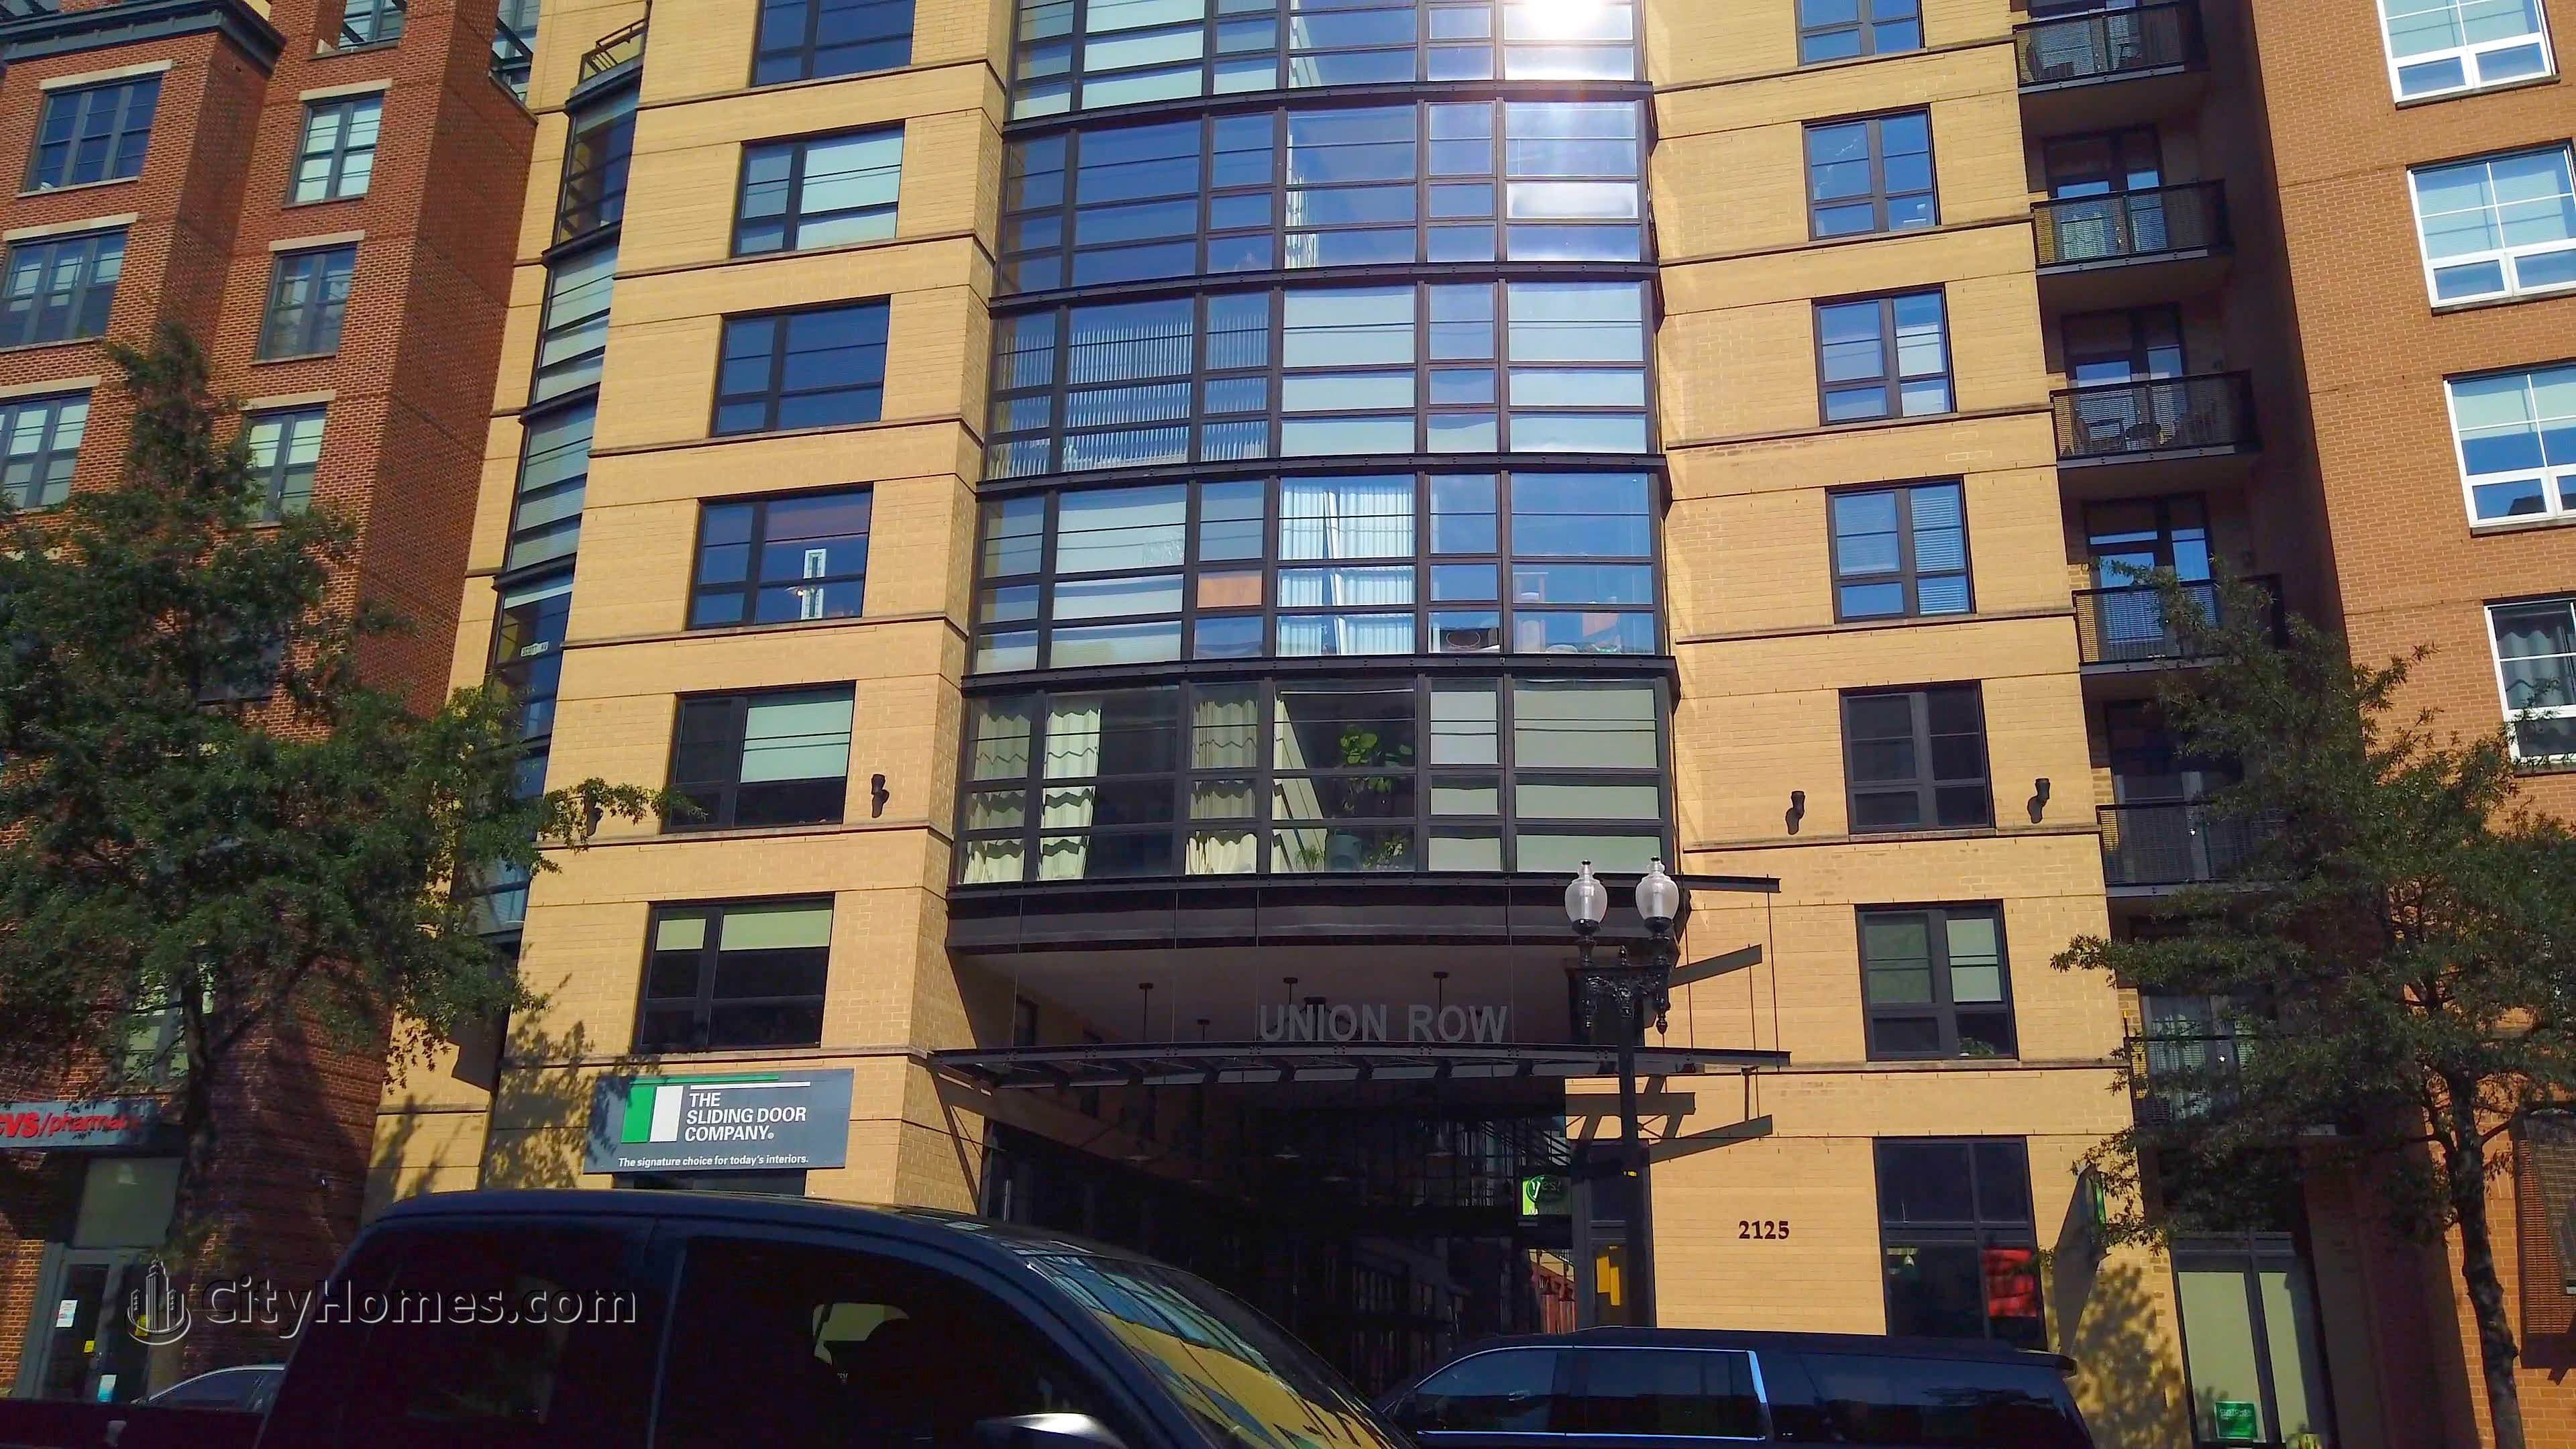 3. Flats at Union Row gebouw op 2125 14th St NW, U Street Corridor, Washington, DC 20009